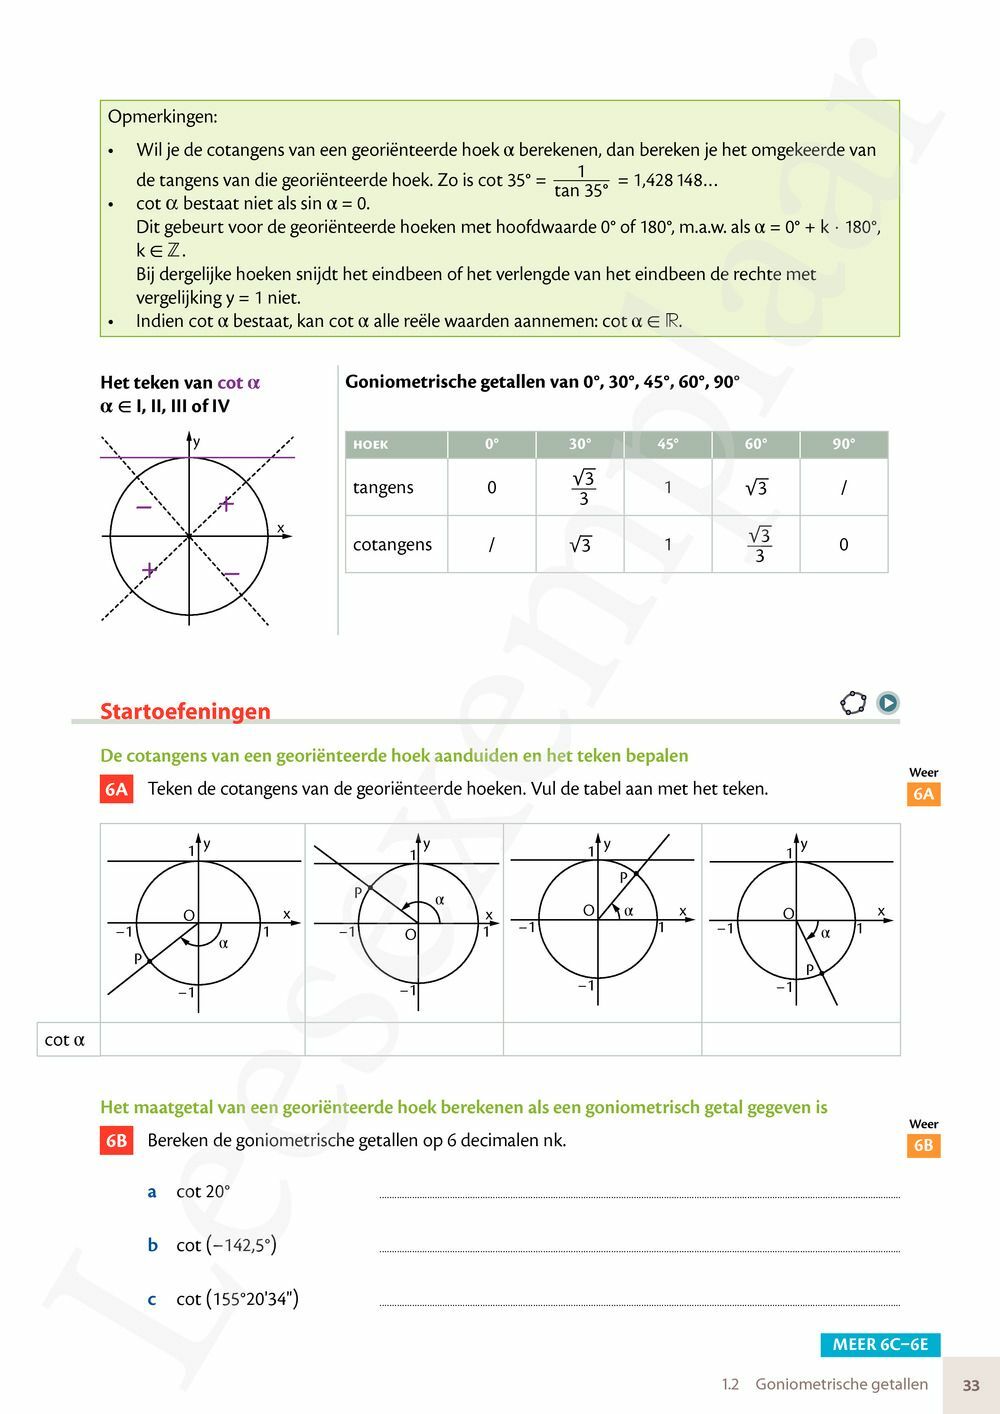 Preview: Matrix Wiskunde 4.4-5 Leerwerkboek B Grafen - Meetkunde – Statistiek (incl. Pelckmans Portaal)